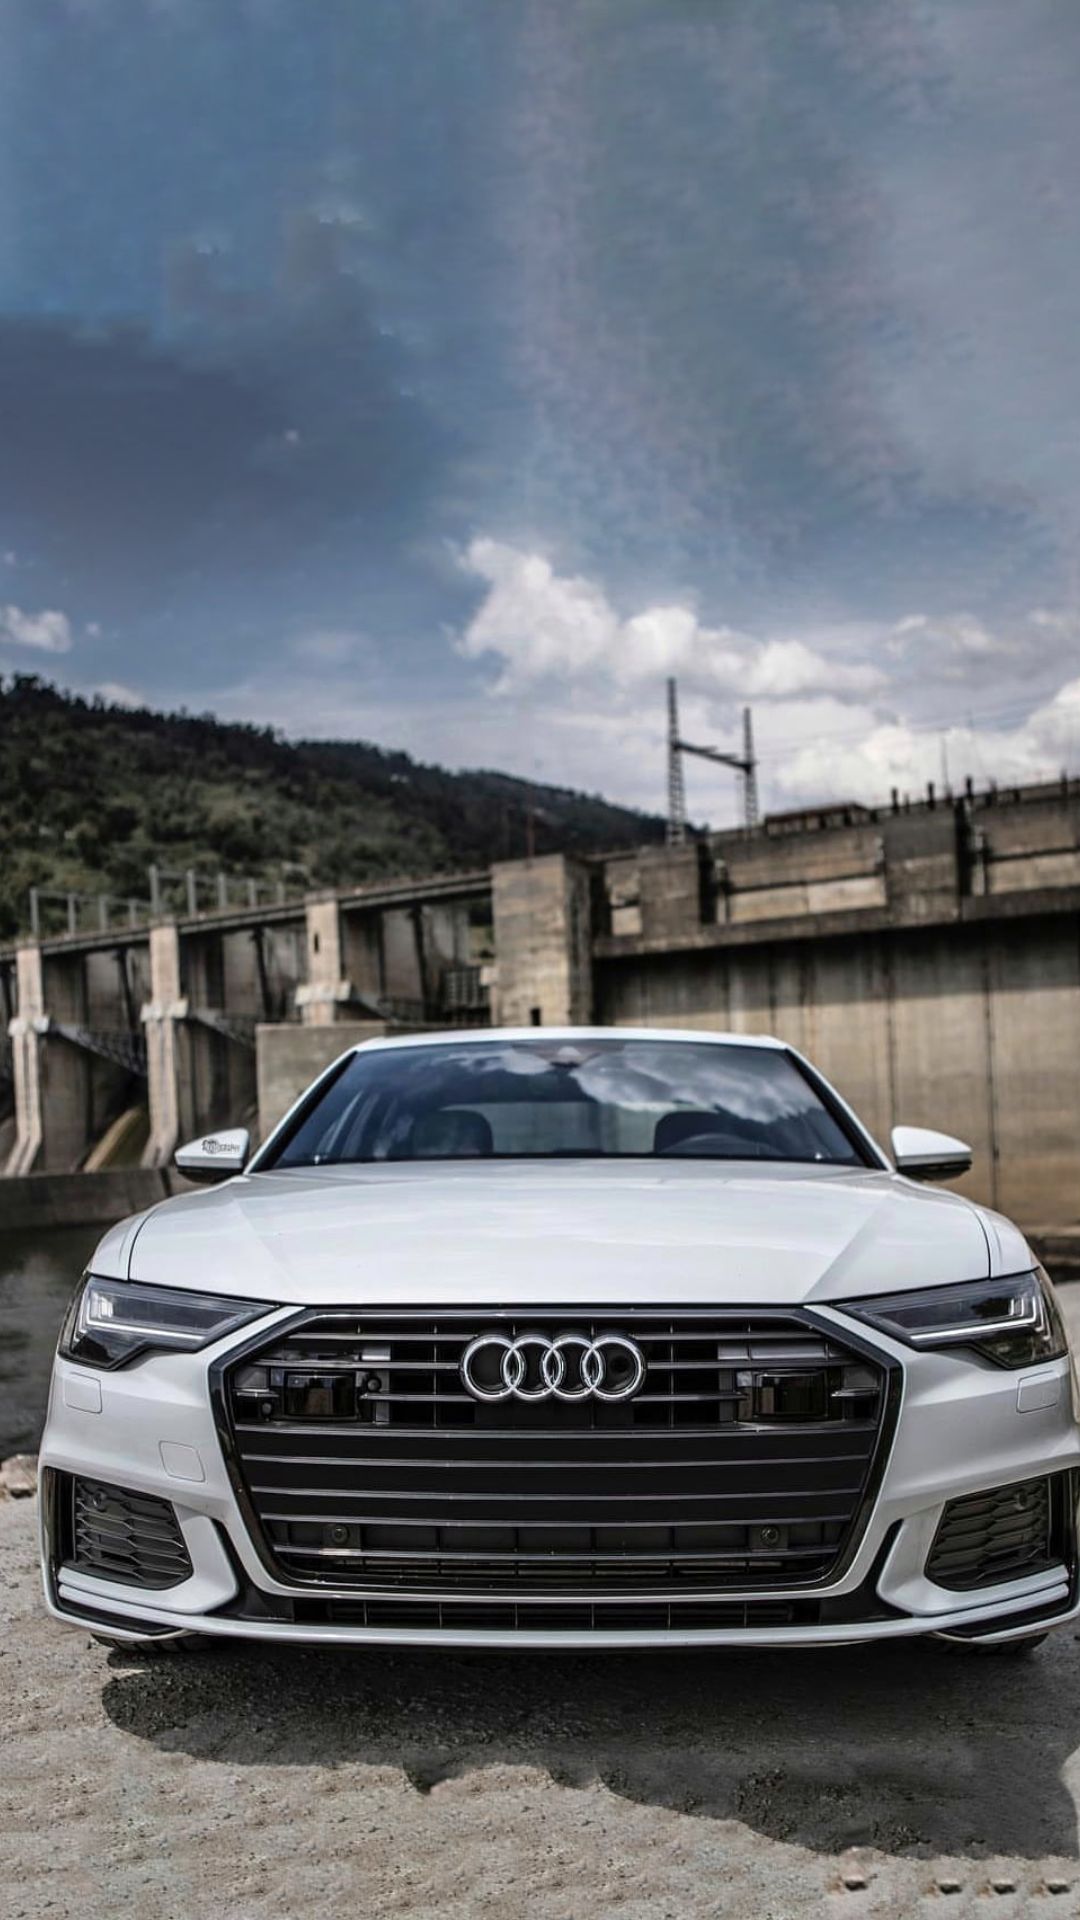 Audi A6 Wallpaper iPhone 13